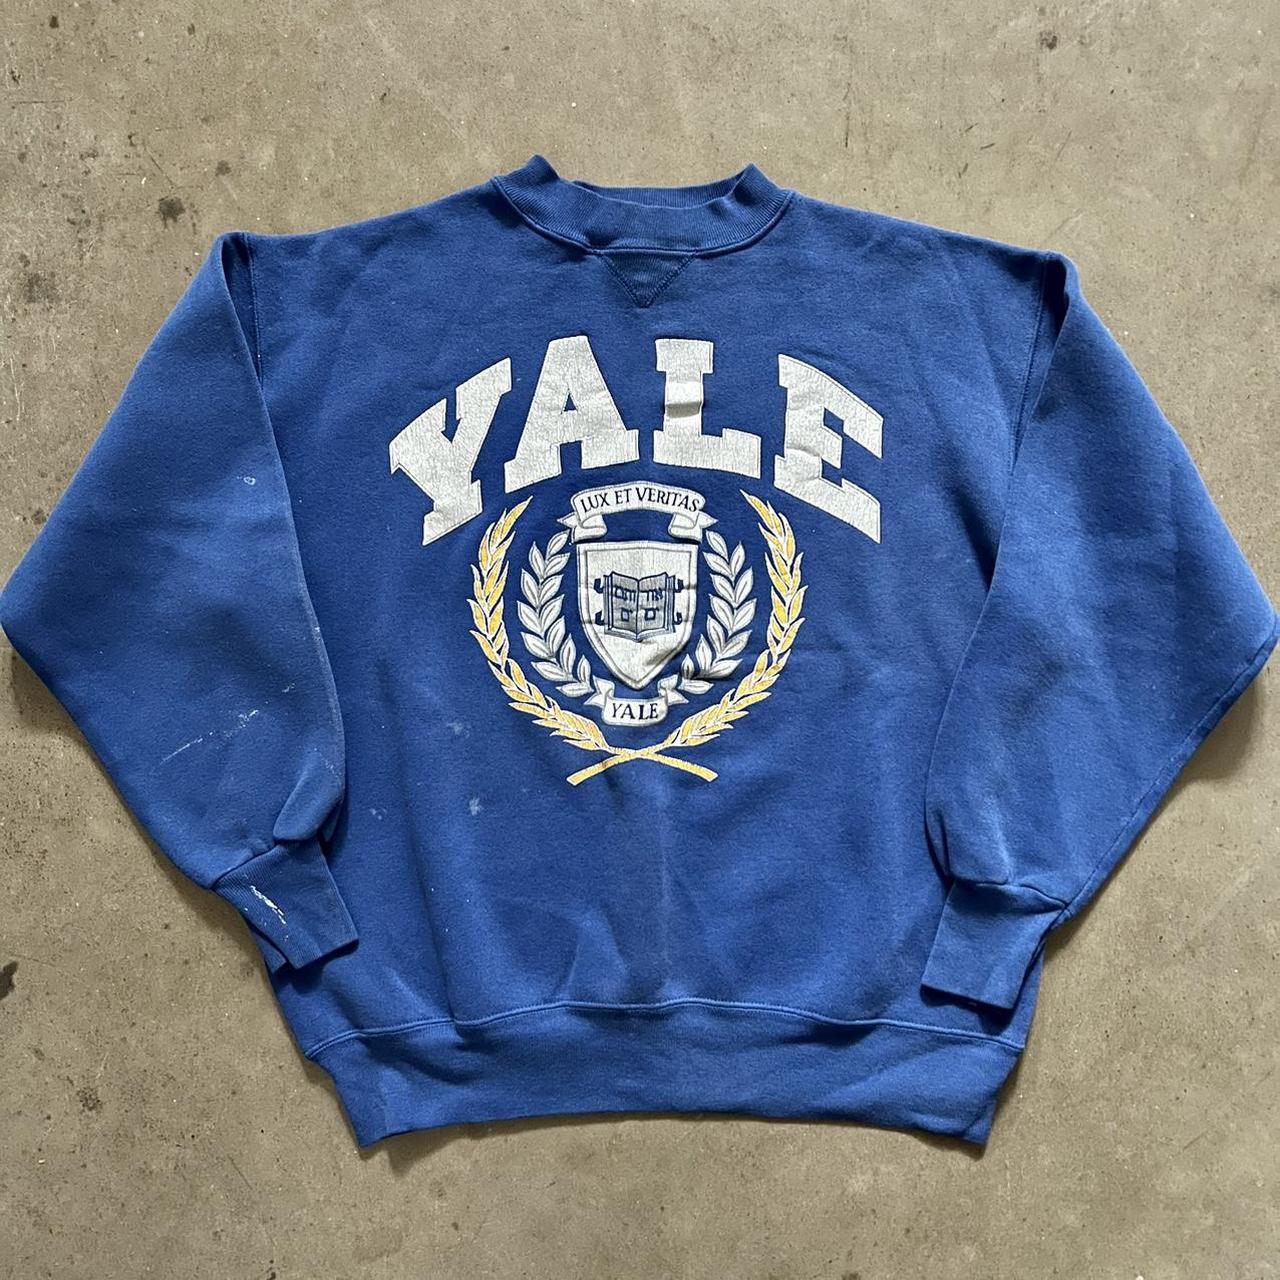 Vintage 1980s Champion Yale University Crewneck... - Depop